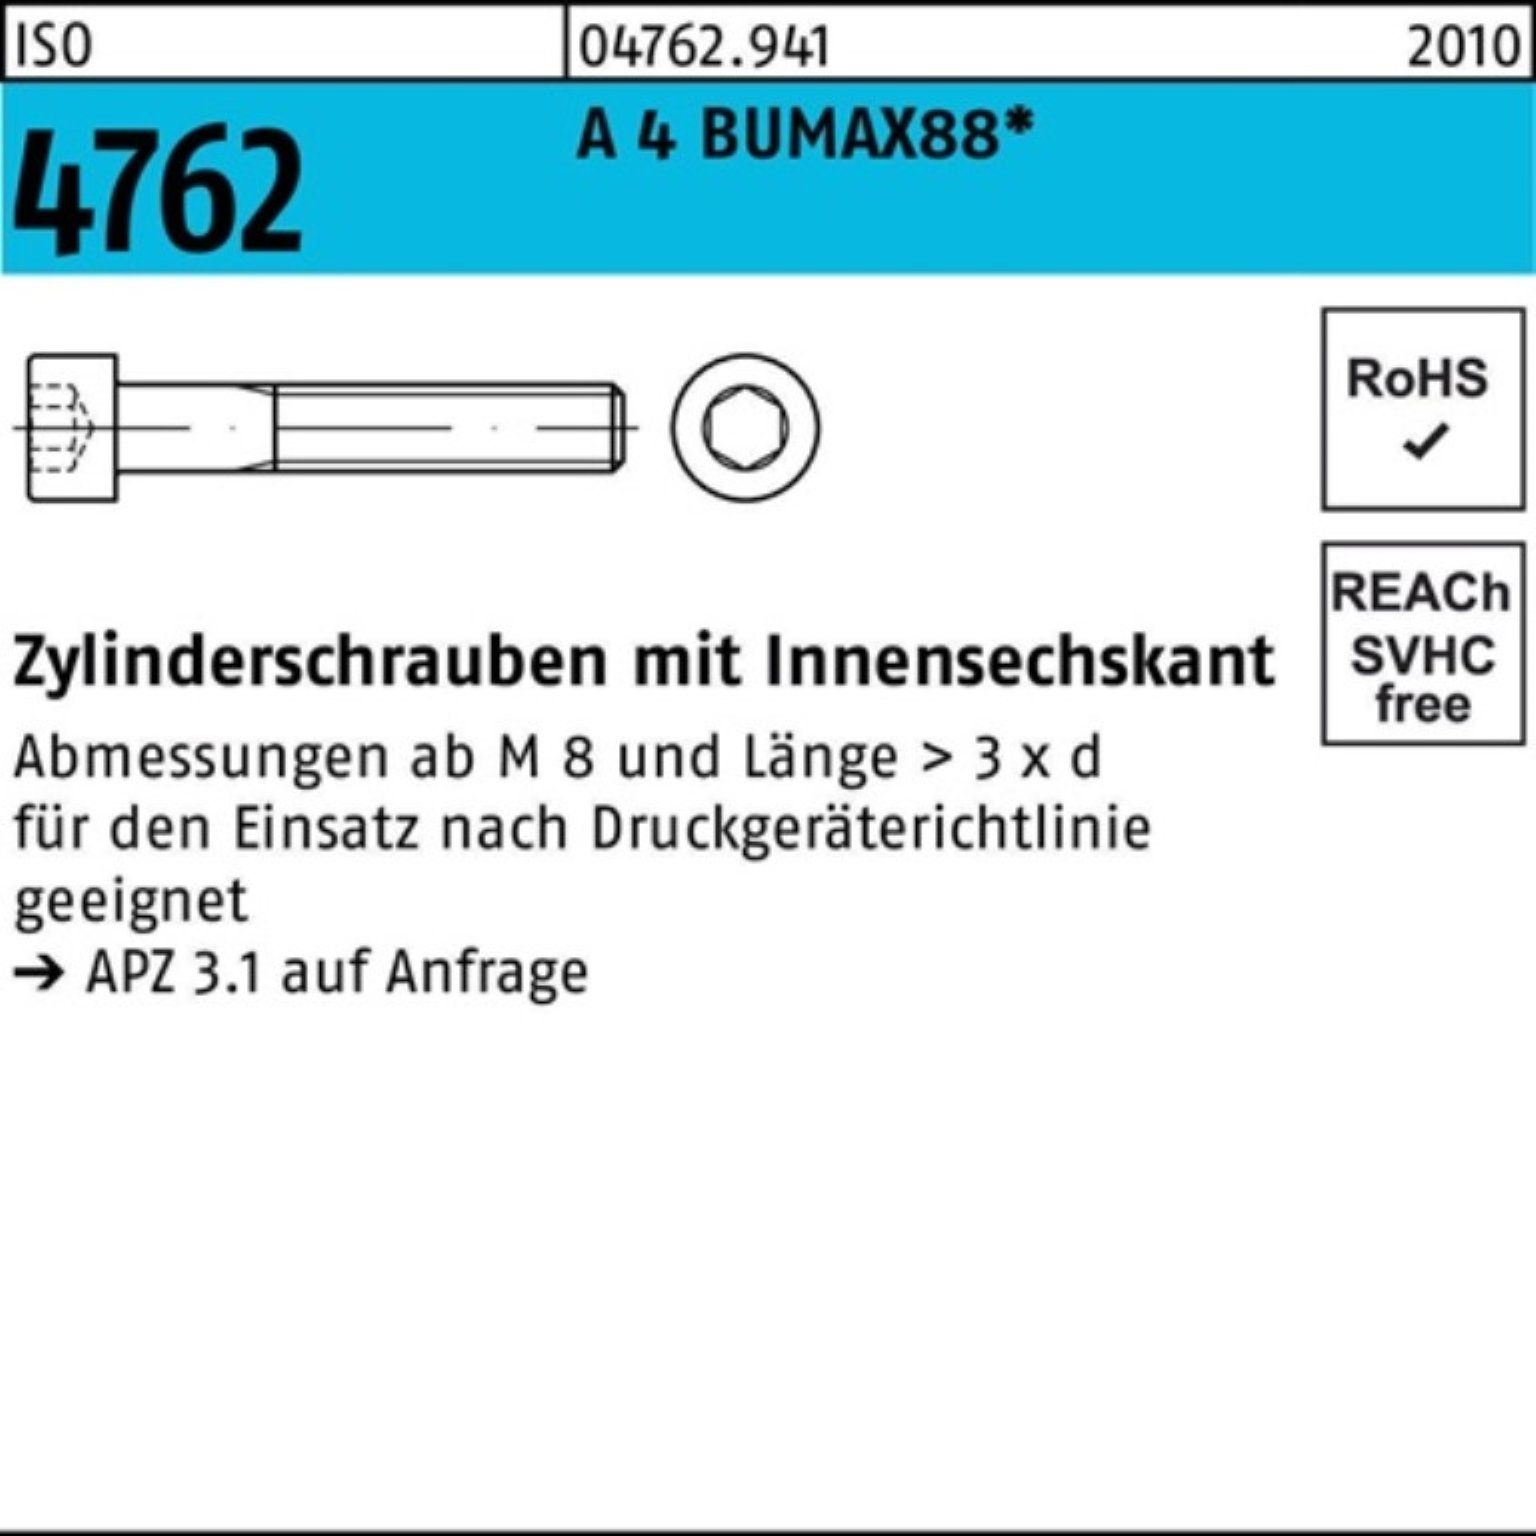 Bufab Zylinderschraube 200er Pack Zylinderschraube 4762 200 Innen-6kt BUMAX88 A 4 M4x ISO 25